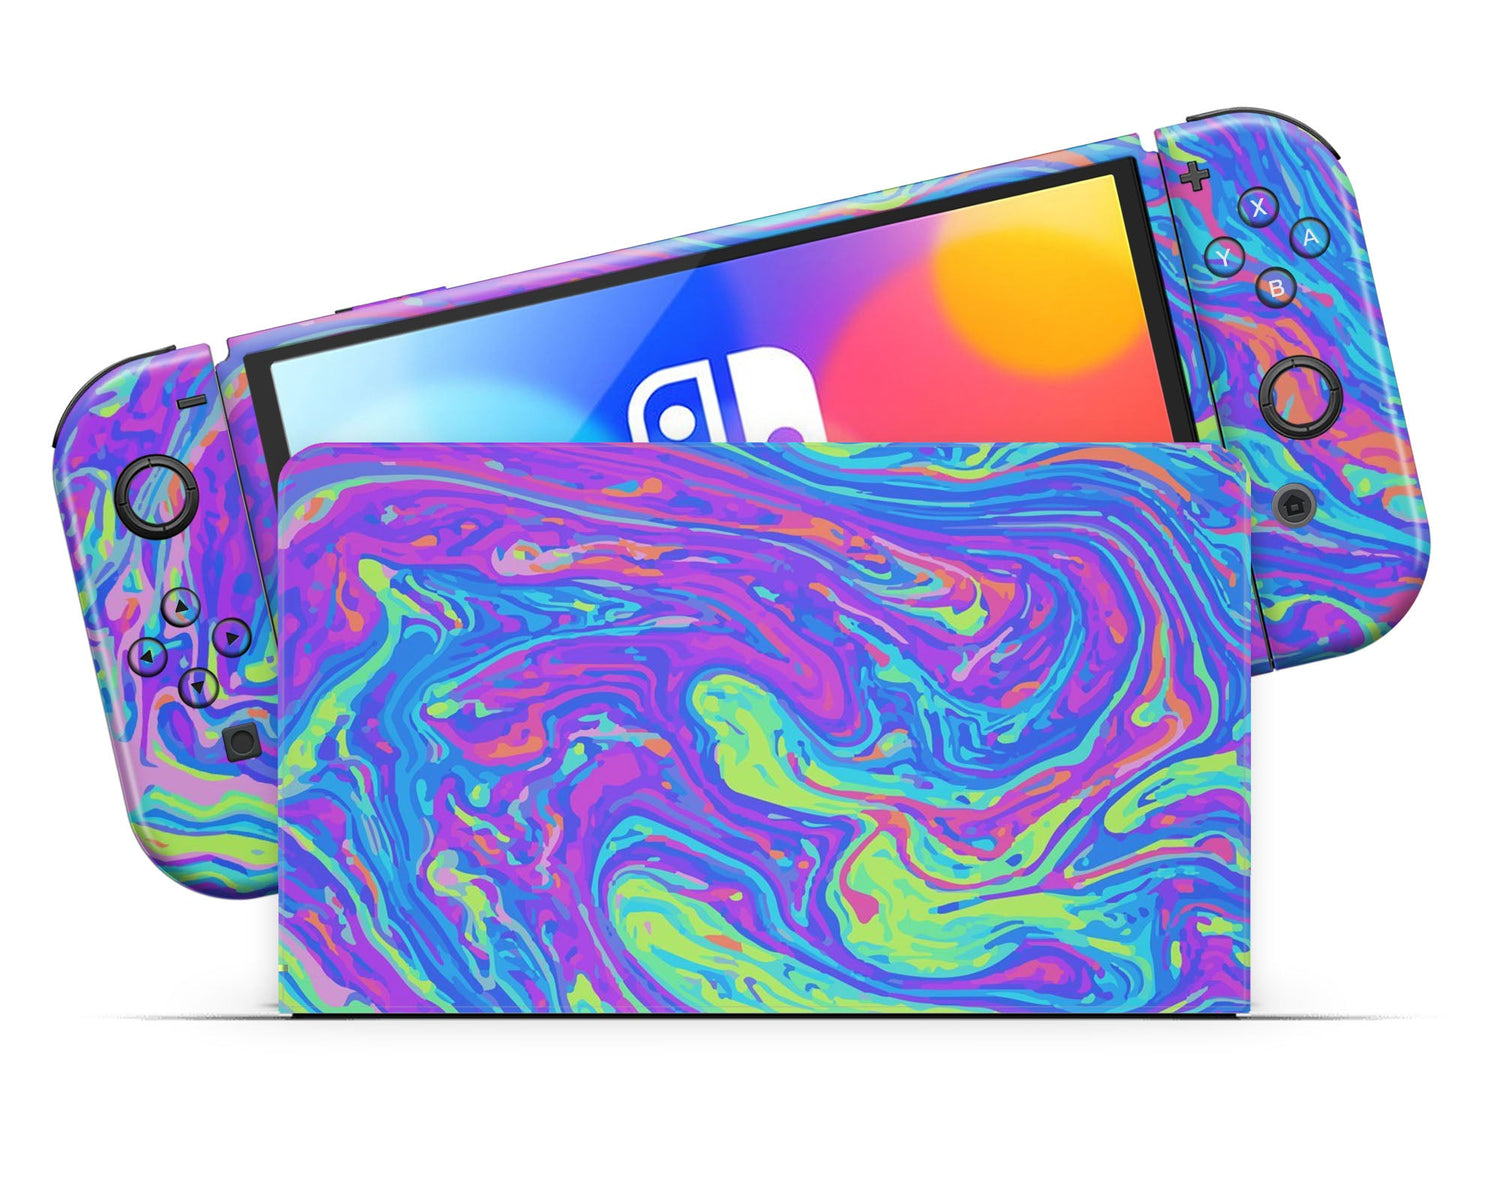 Lux Skins Nintendo Switch OLED Trippy Space Swirls Full Set Skins - Pattern Galaxy Skin